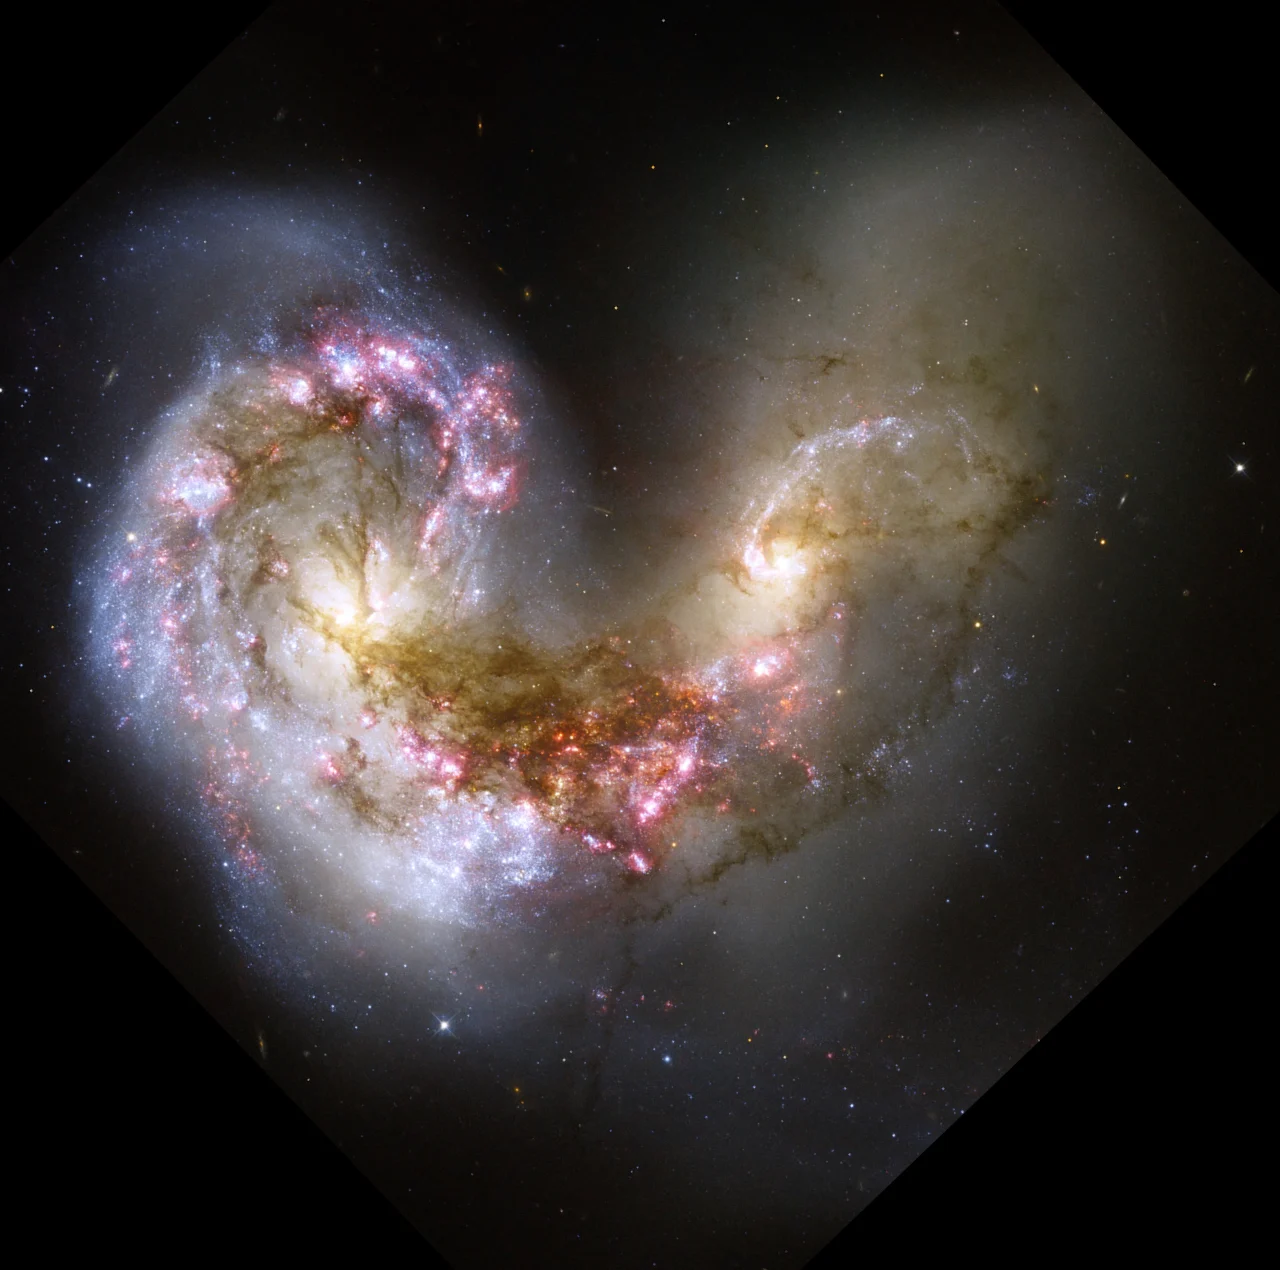 Antenna Galaxies Heart - Hubble